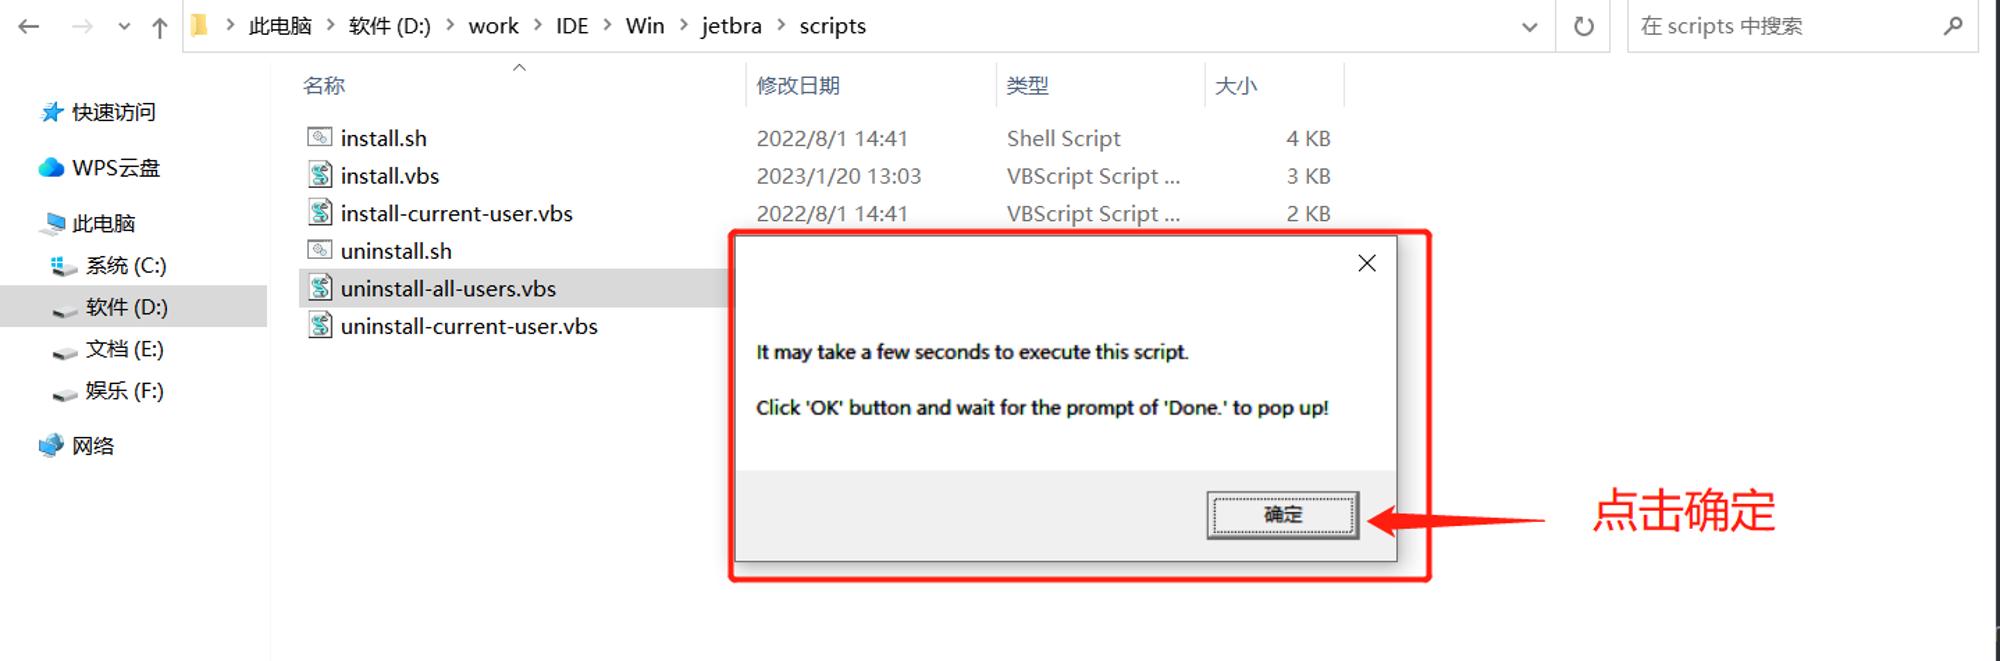 JetBrains DataSpell 2023.1.3 instal the new for mac